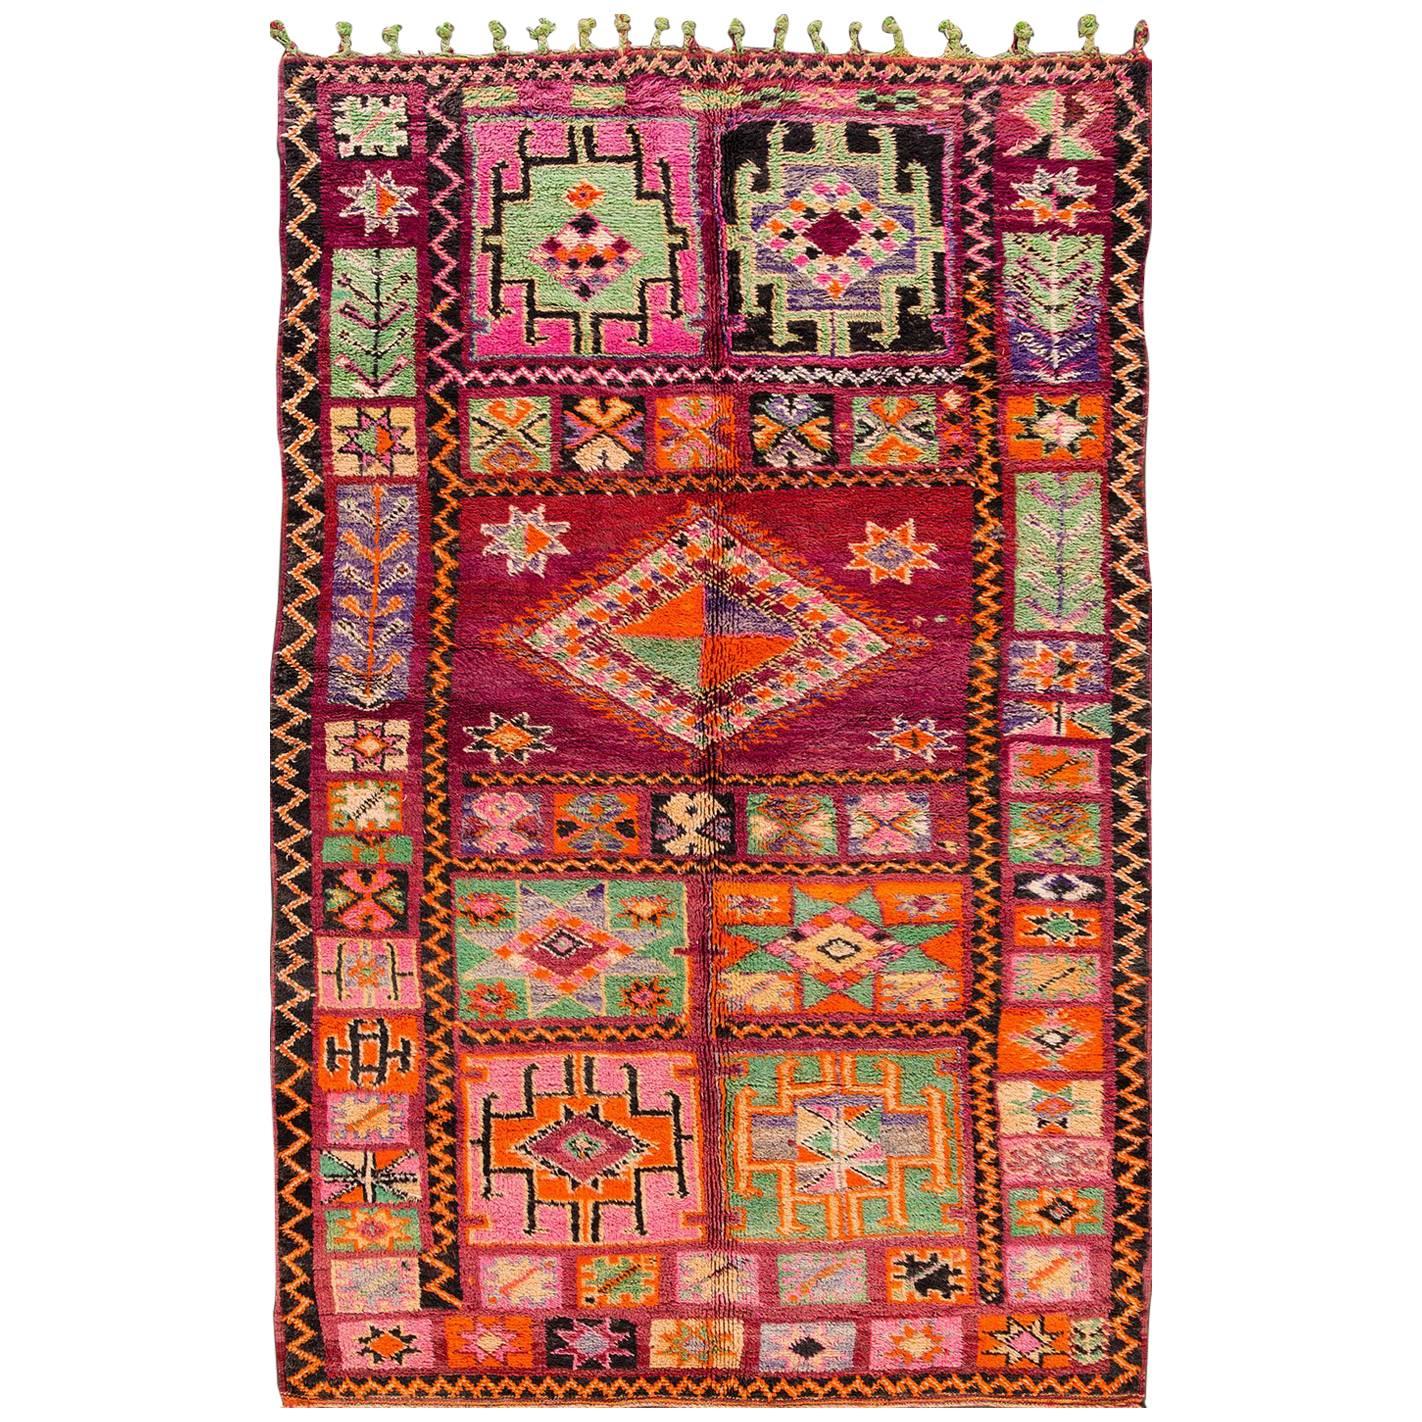 Vintage Multicolored Geometric Moroccan Carpet, 5.10x9.03